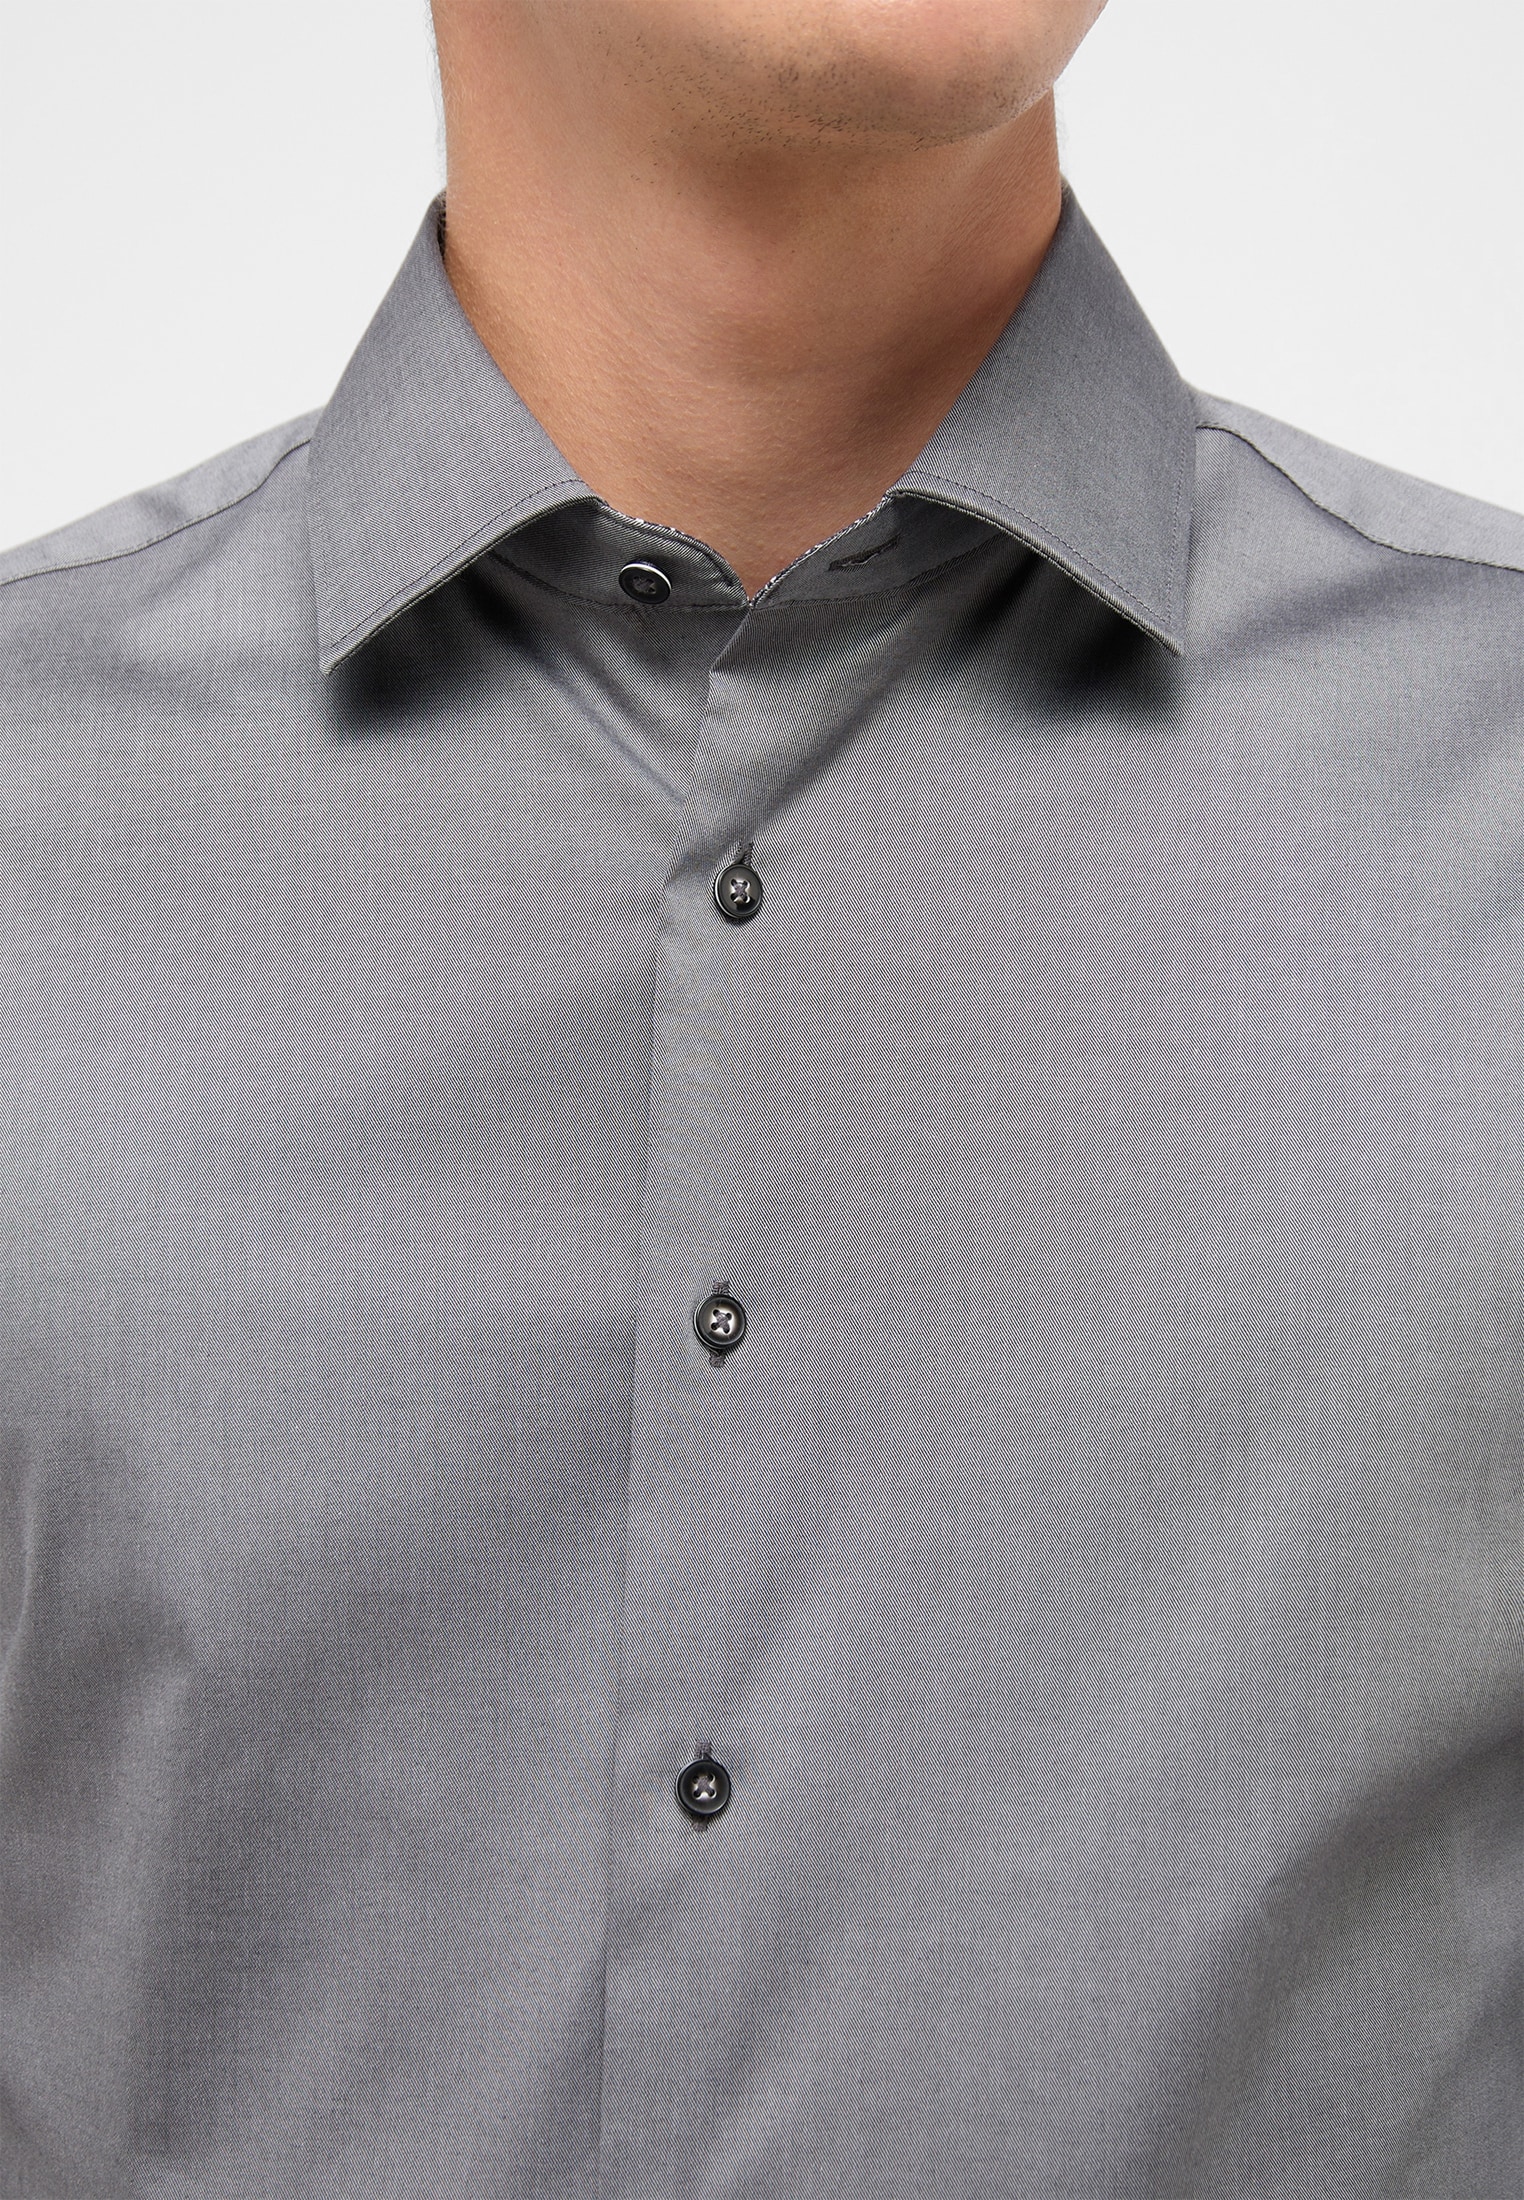 Premium Party Wear Solid Light Grey Shirt - Slim Fit, Spread Collar, P –  Shade 45